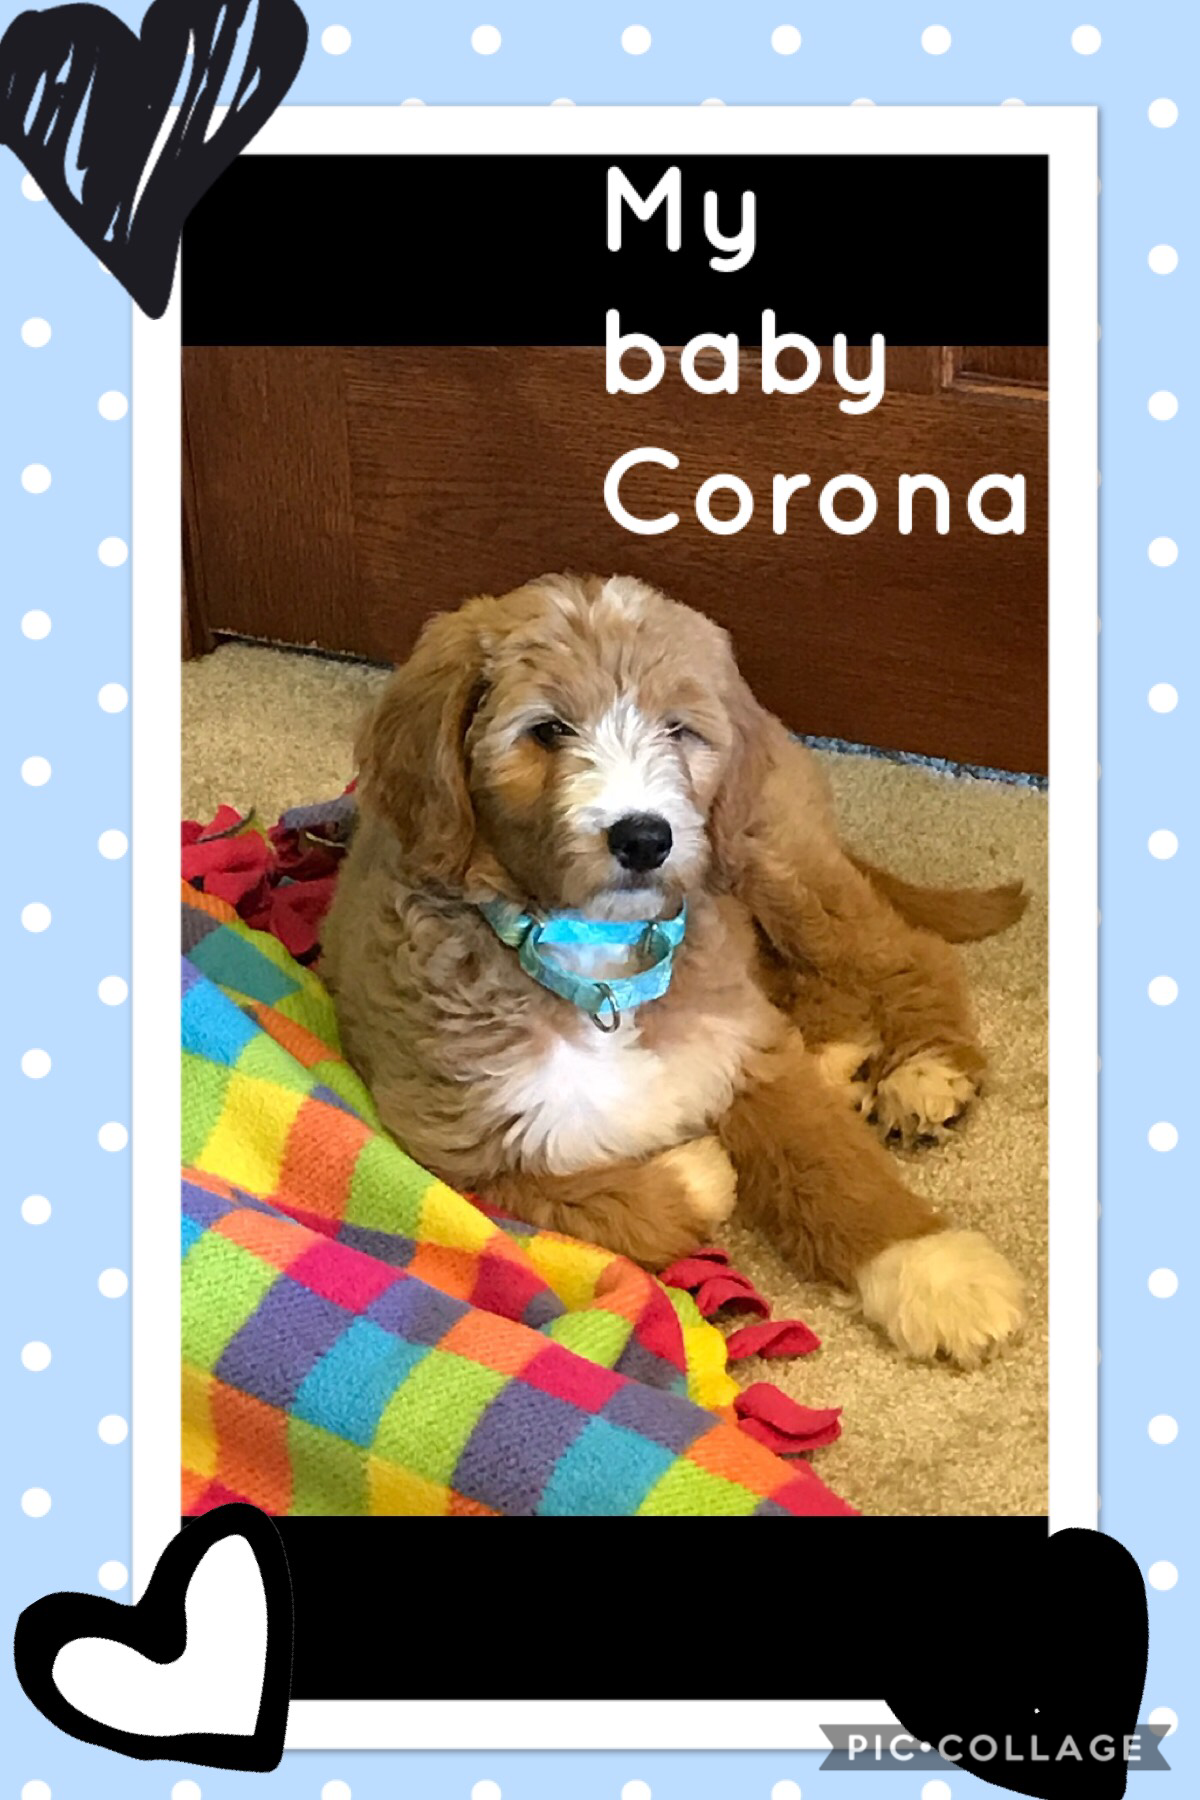 My baby puppy Corona 